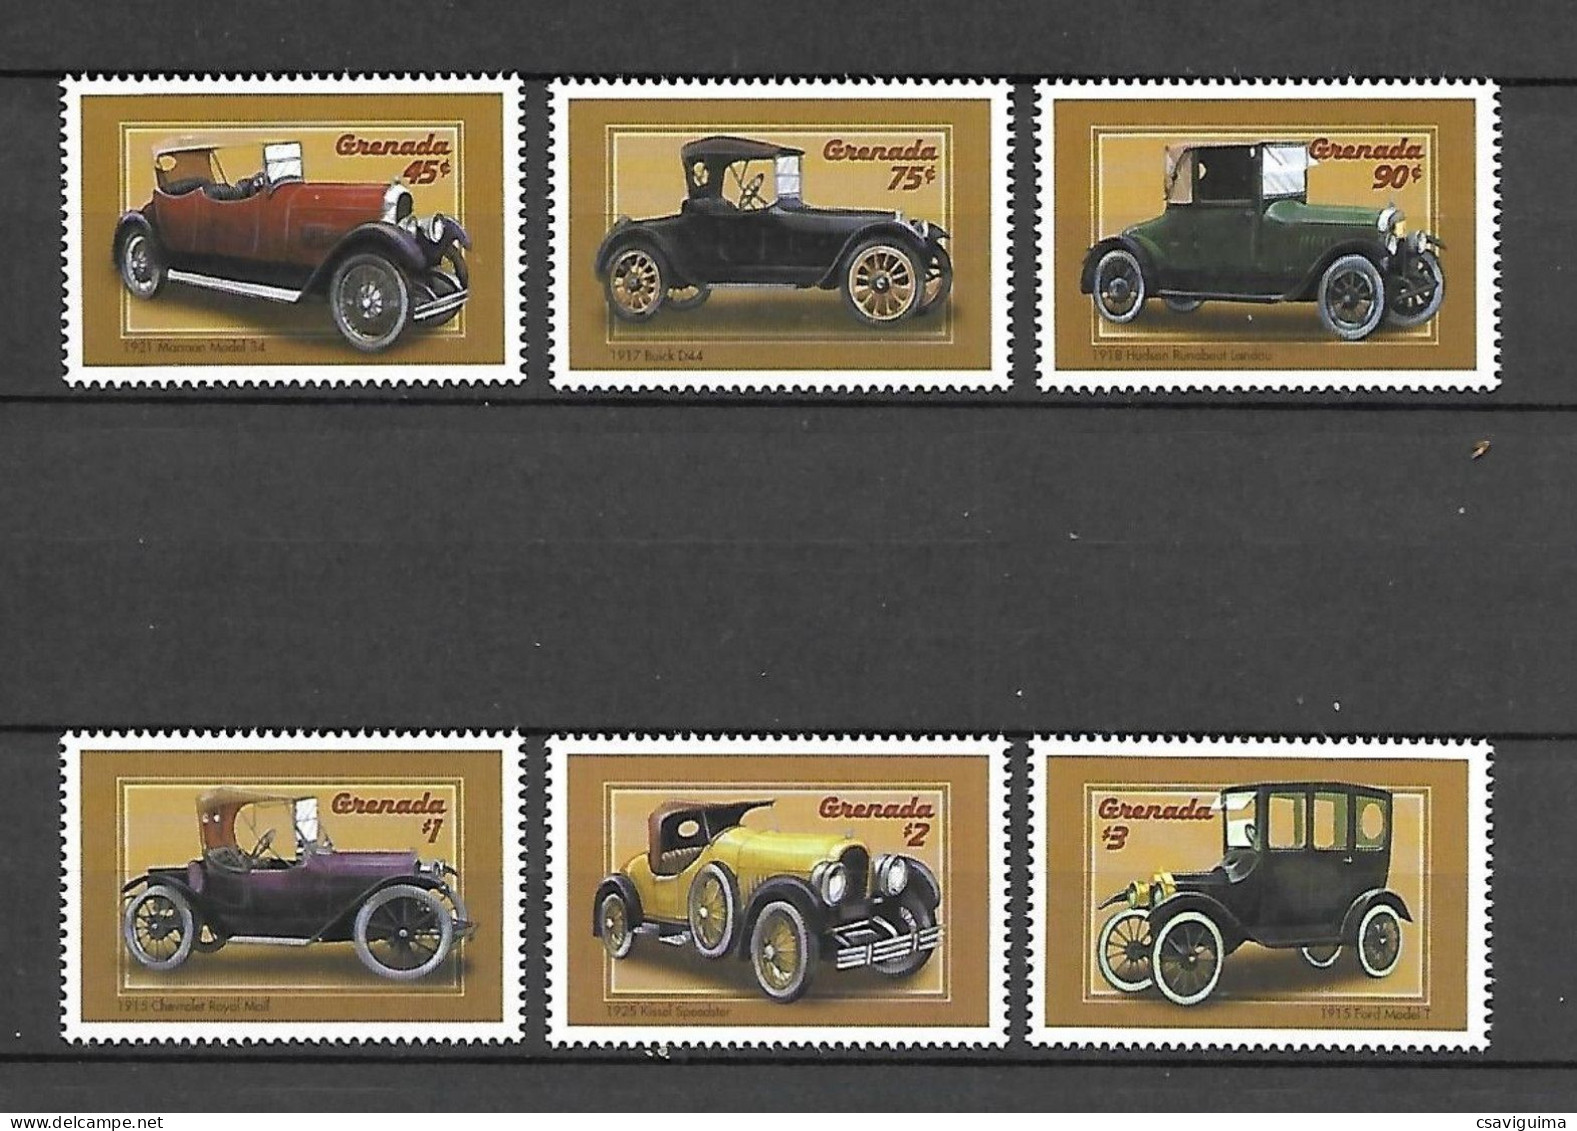 Grenada - 2000 - Classic Cars - Yv 3705/40 - Cars